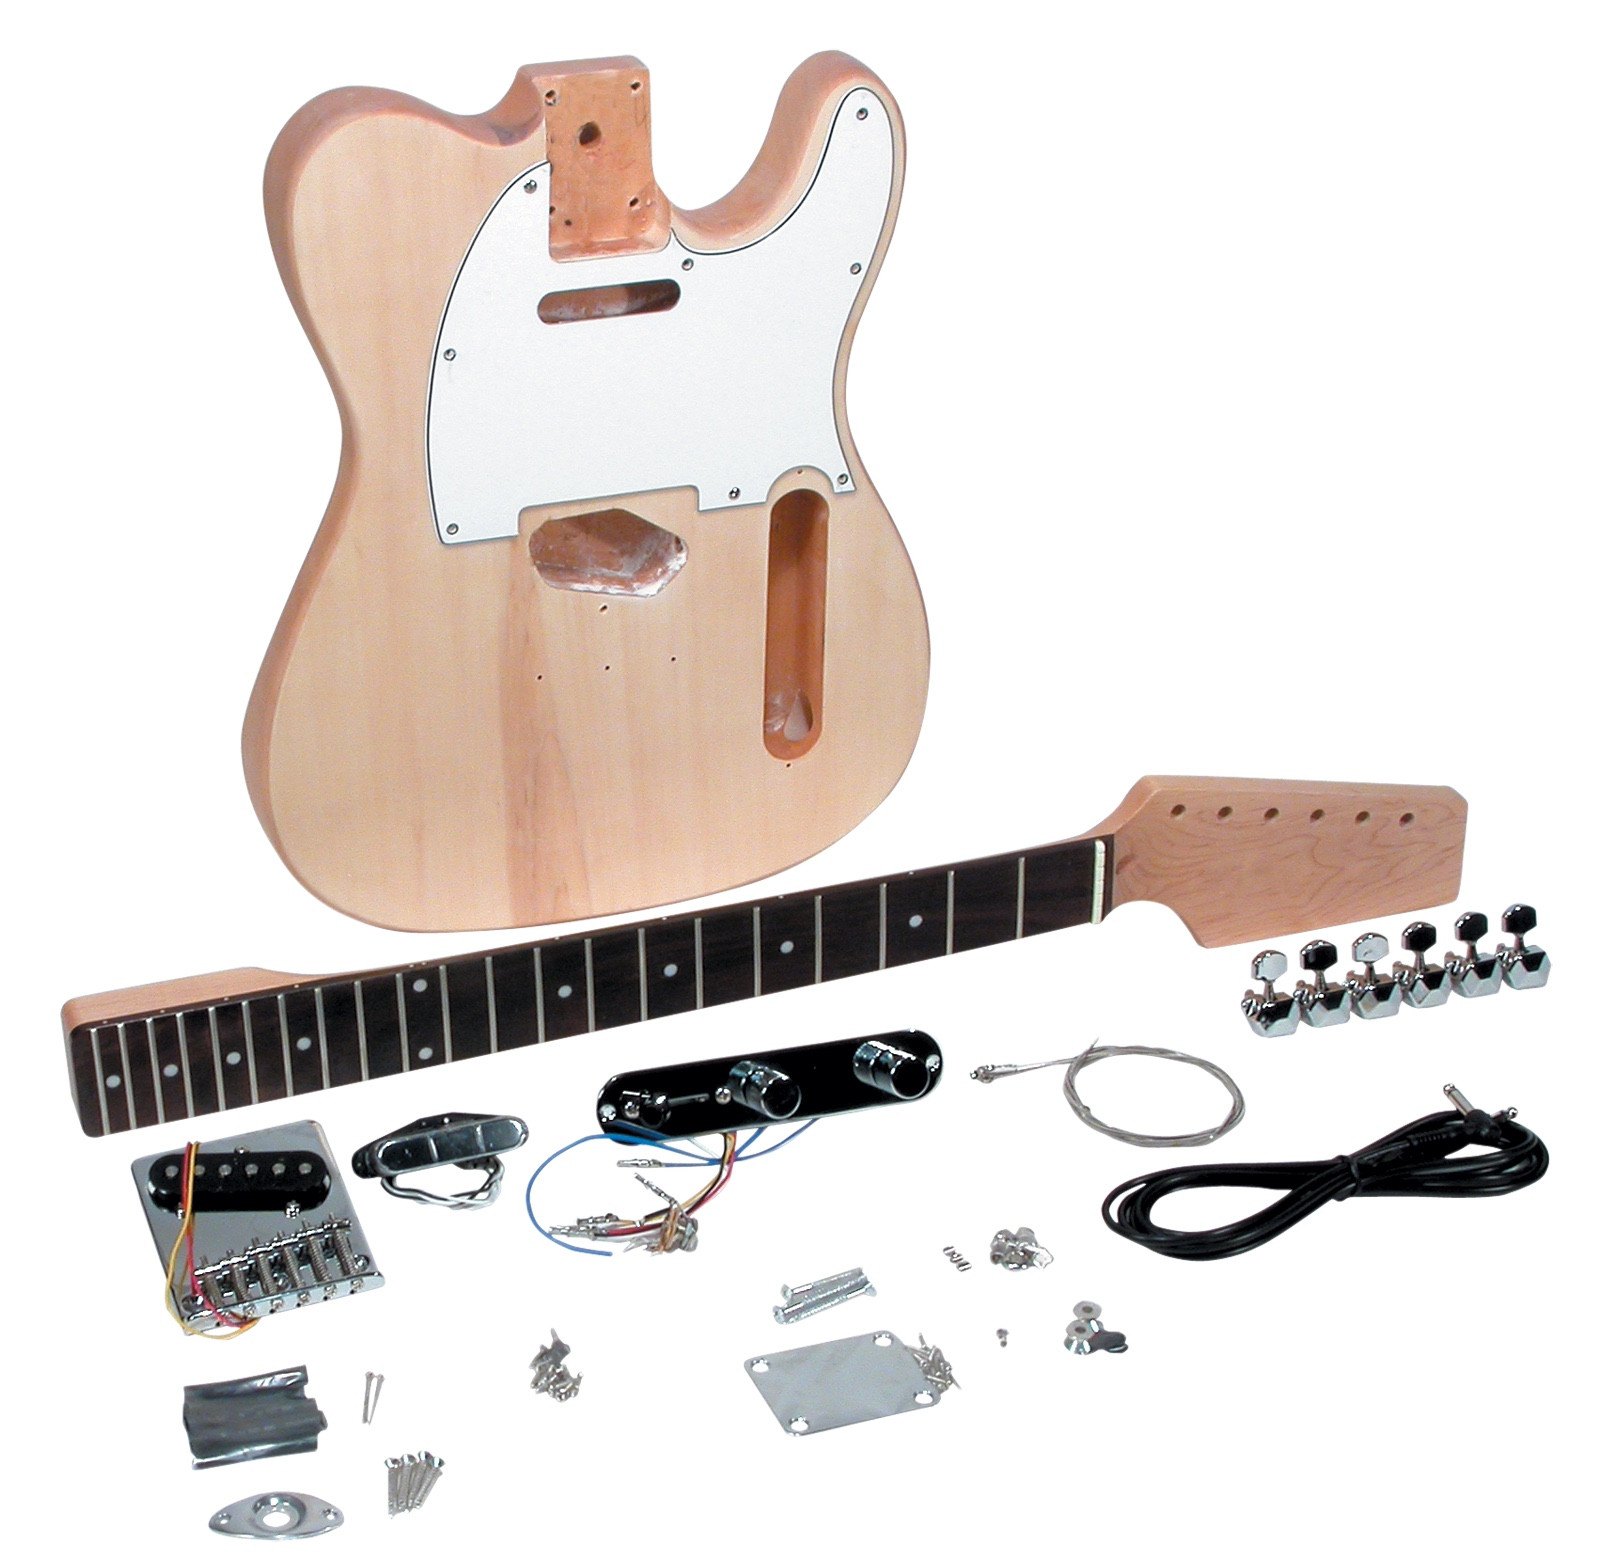 DIY Guitar Kit Amazon
 The Best DIY Guitar Kits Electric All Under $250